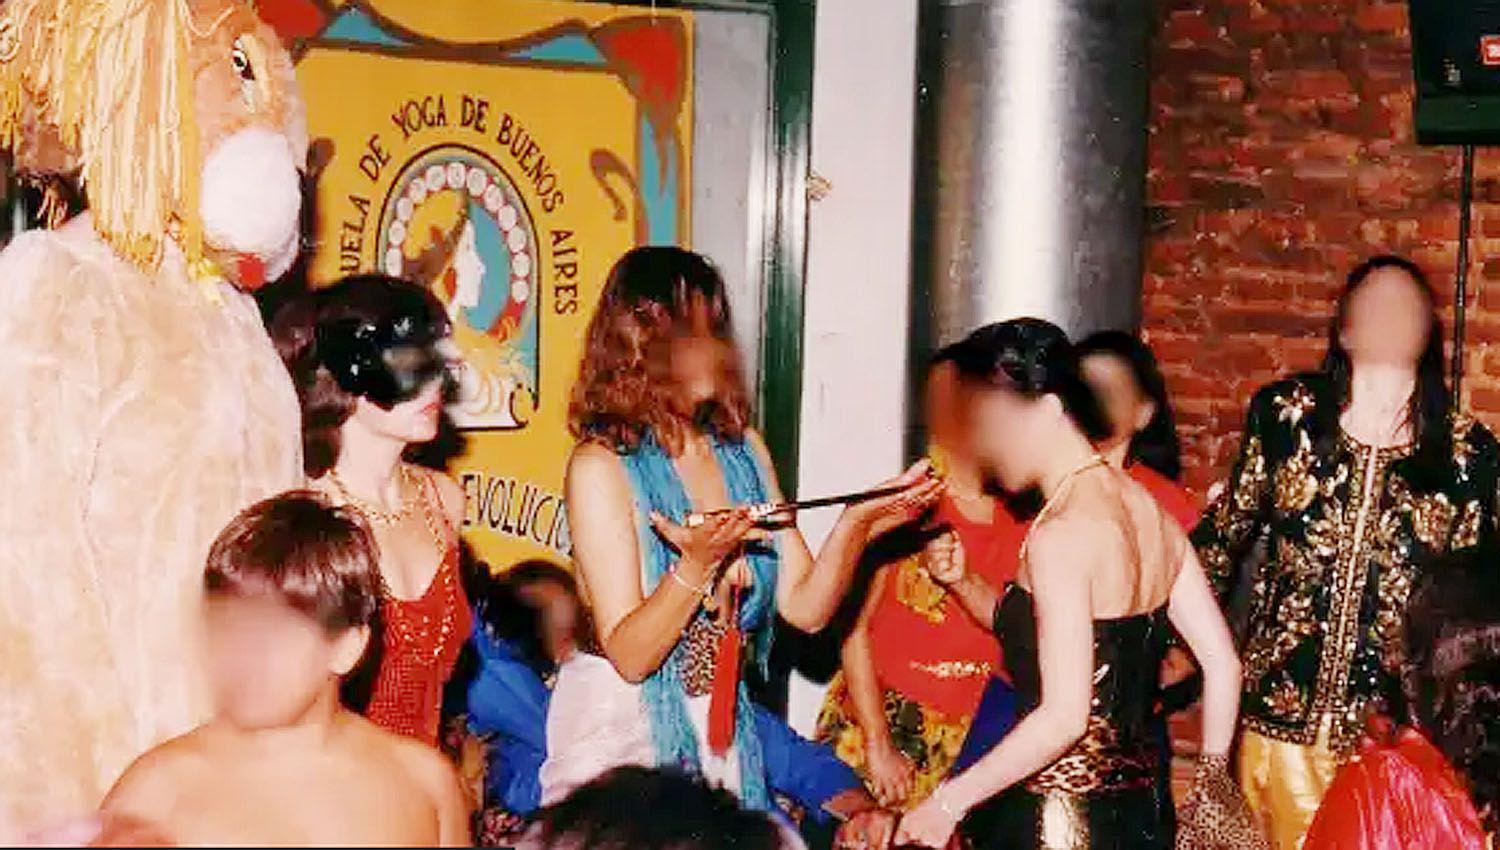 Secta en Villa Crespo- ldquoLos nenes eran obligados a tener sexo con sus padresrdquo